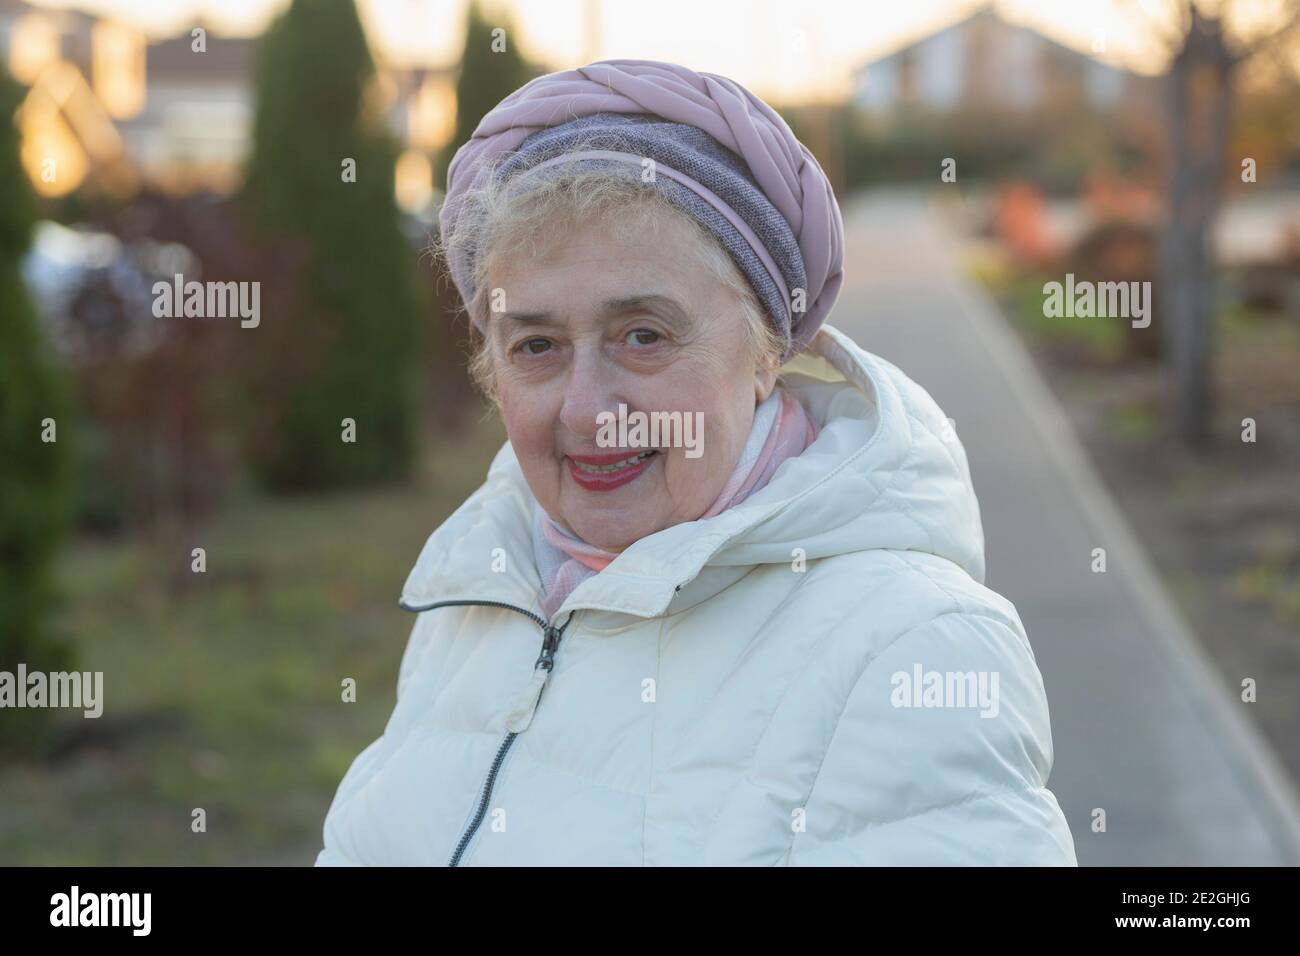 Portrait happy beautiful senior woman in winter coat on sidewalk Stock Photo